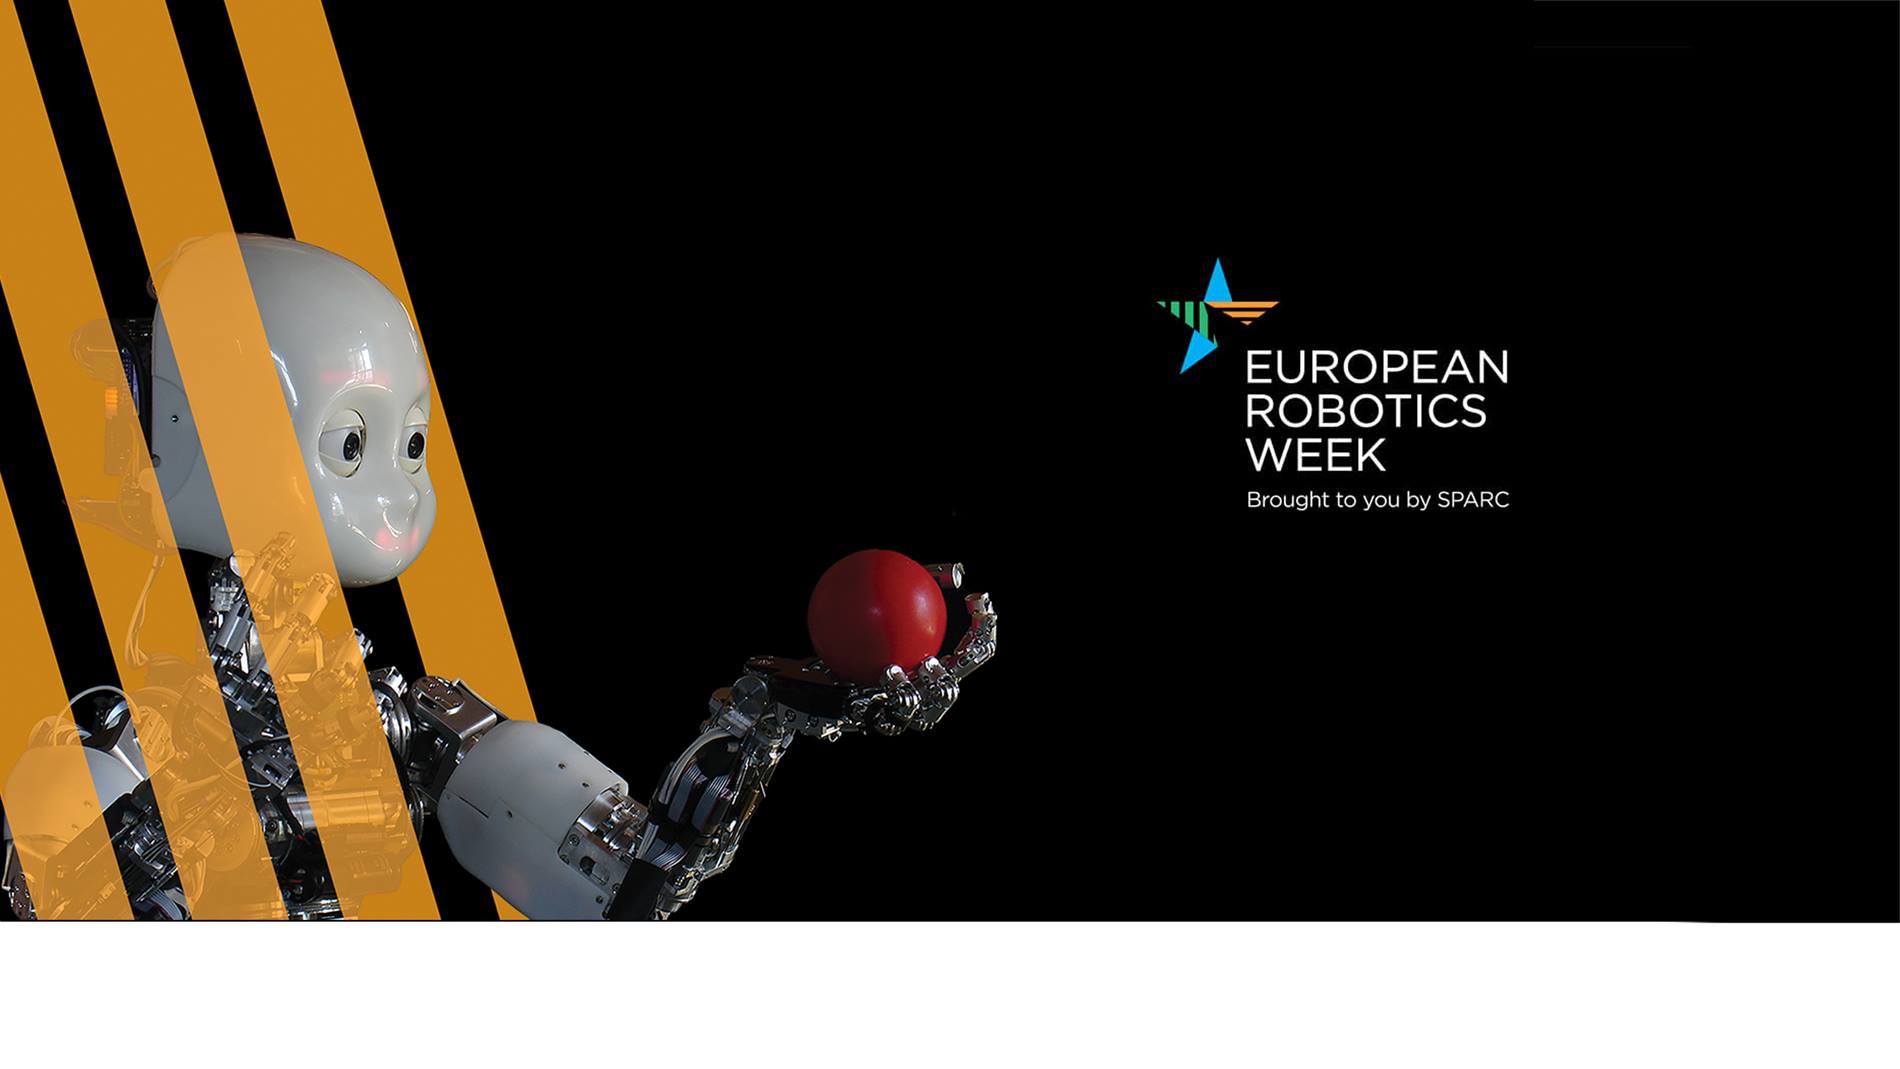 European Robotics Week 2018 in Augsburg